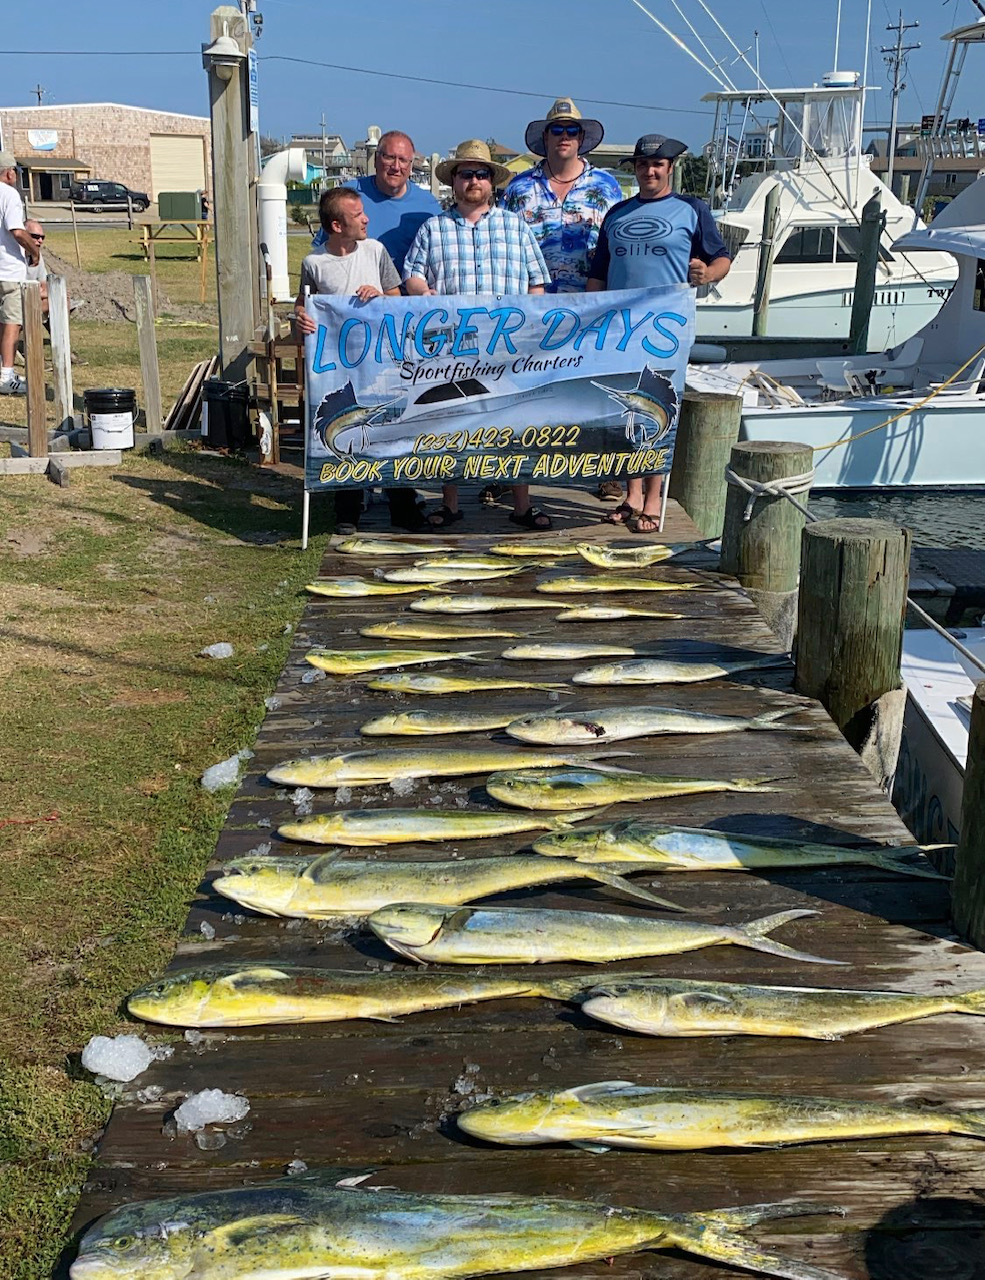 Longer Days Sportfishing Charters Hatteras, NC Teach's Lair Marina